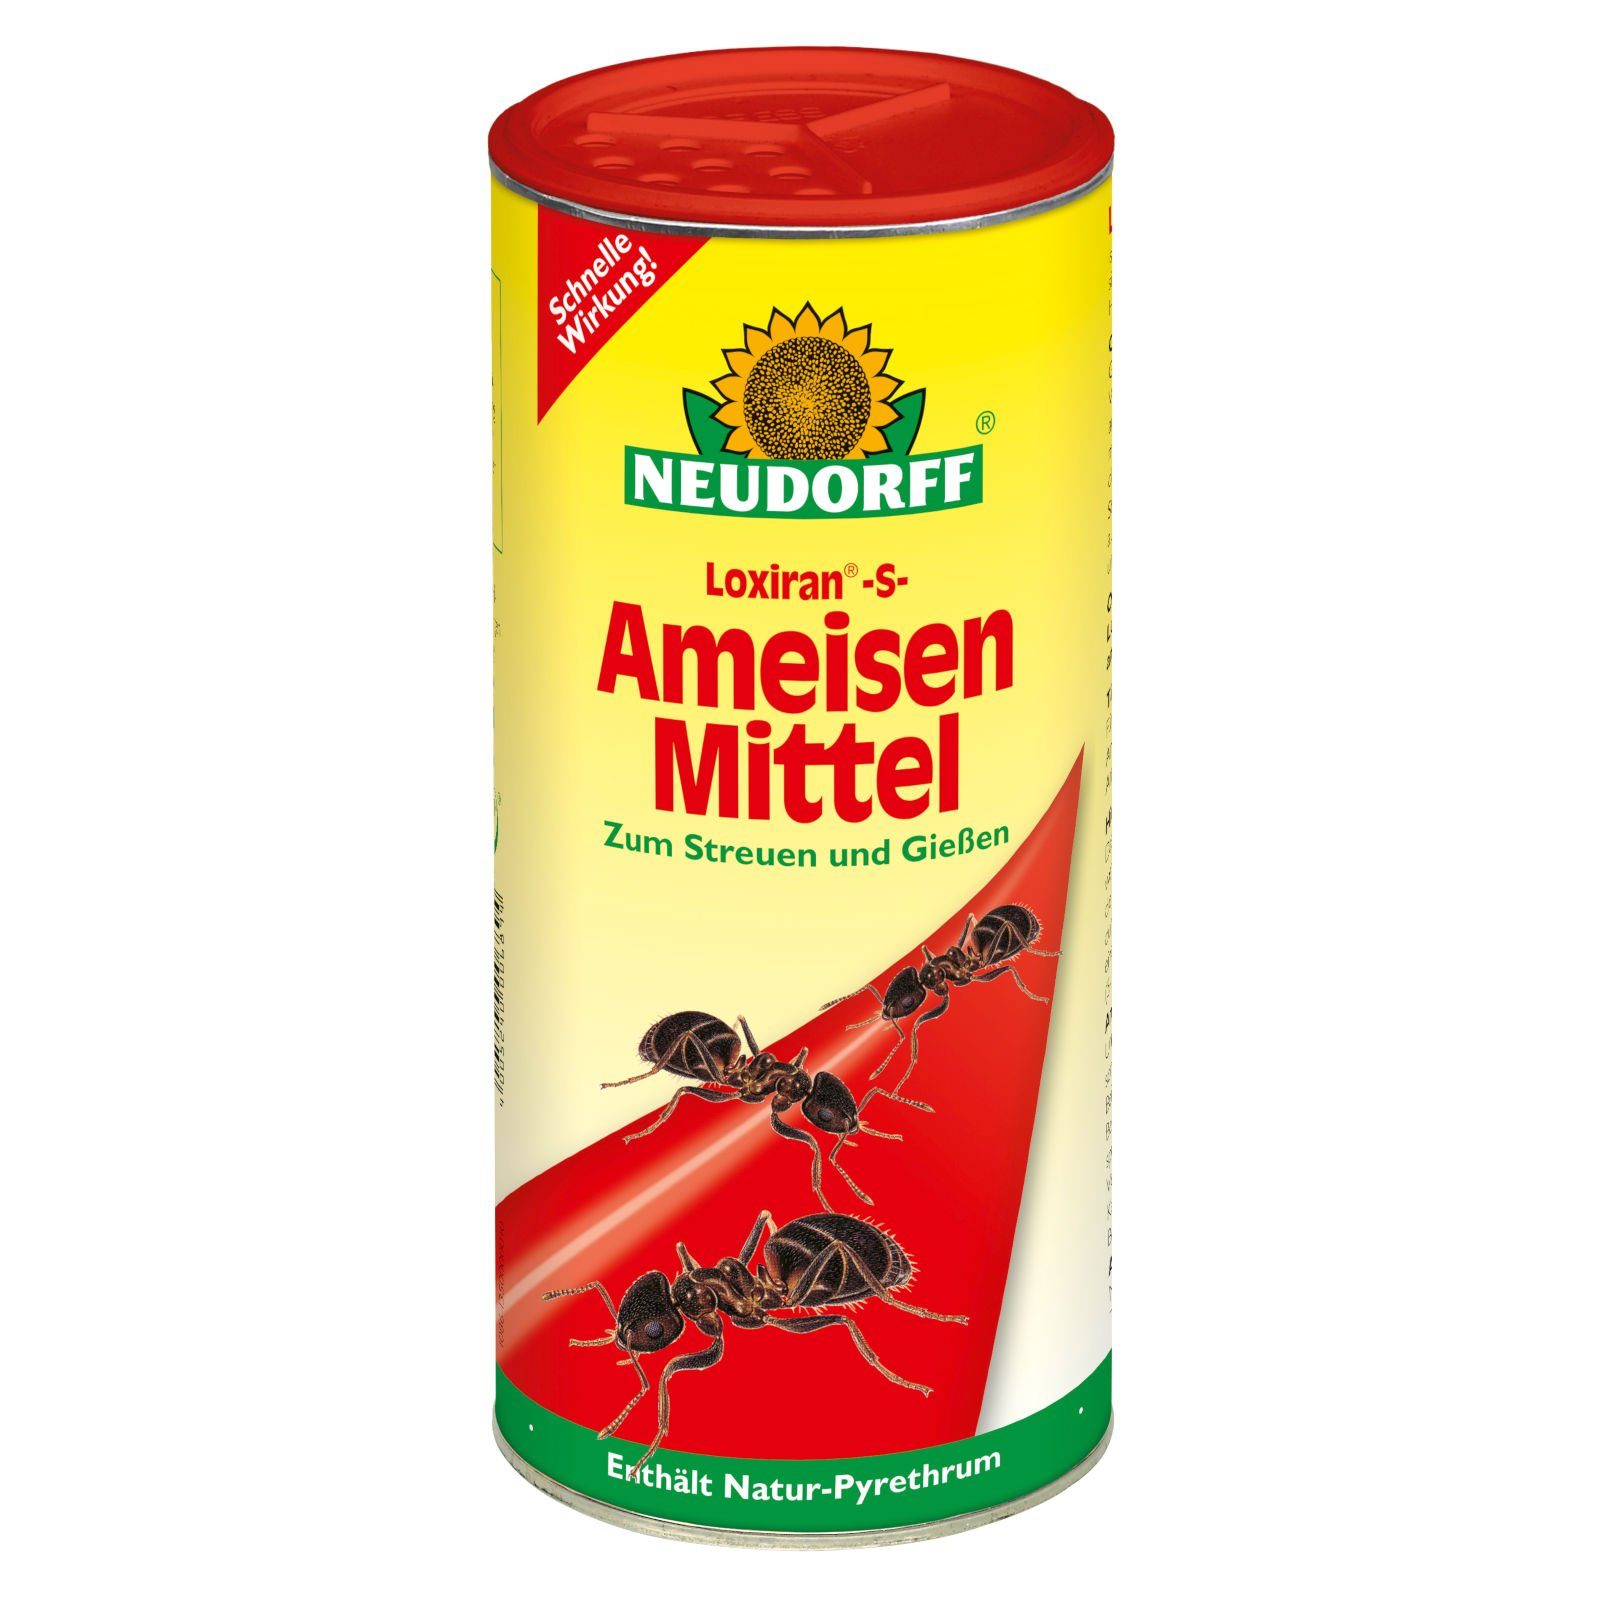 Neudorff Ameisengift Loxiran -S- AmeisenMittel - 500 g